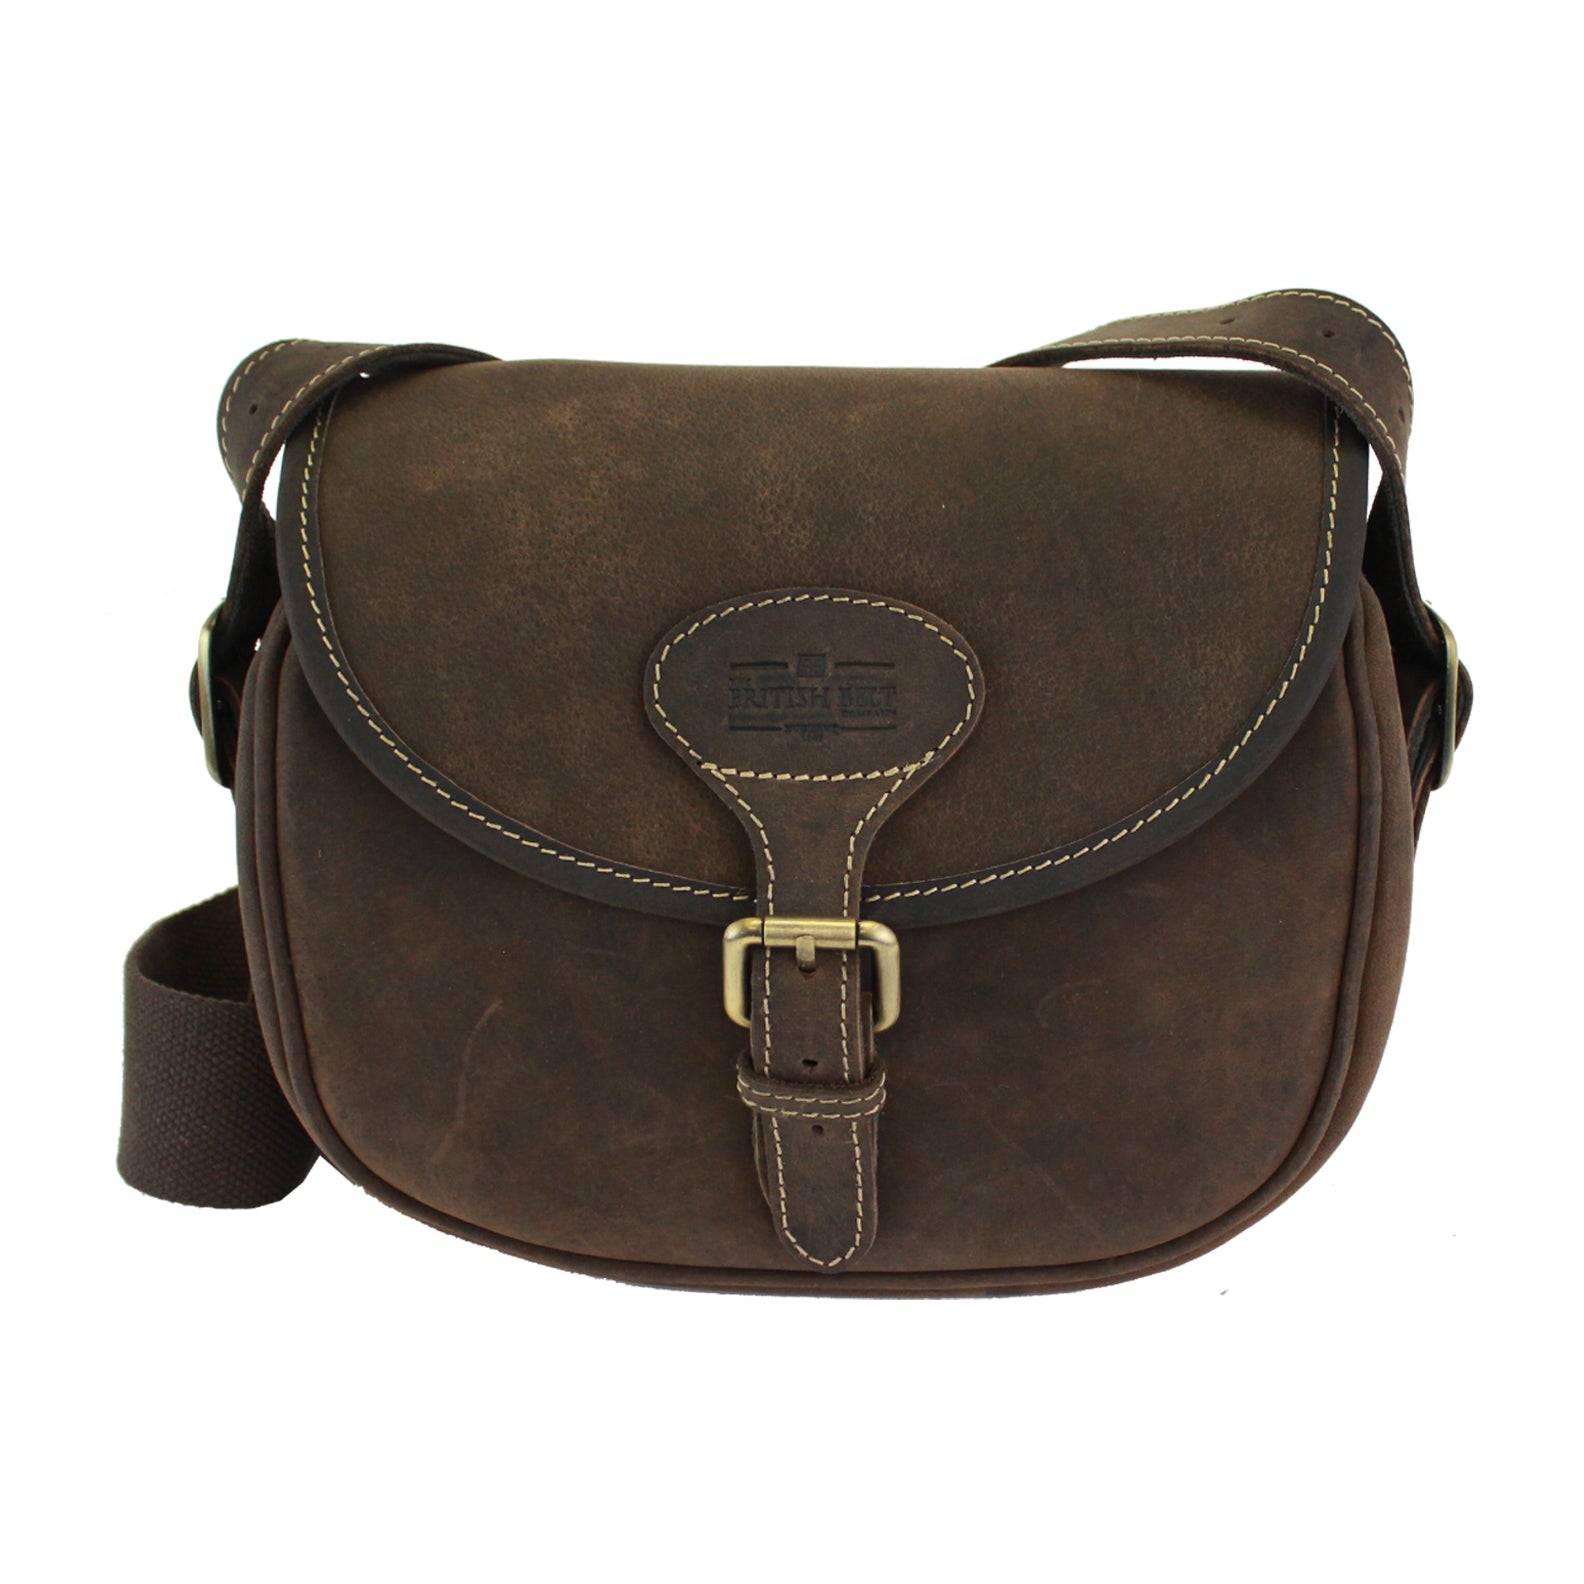 British Bag Co. Berkeley Leather Cartridge Bag